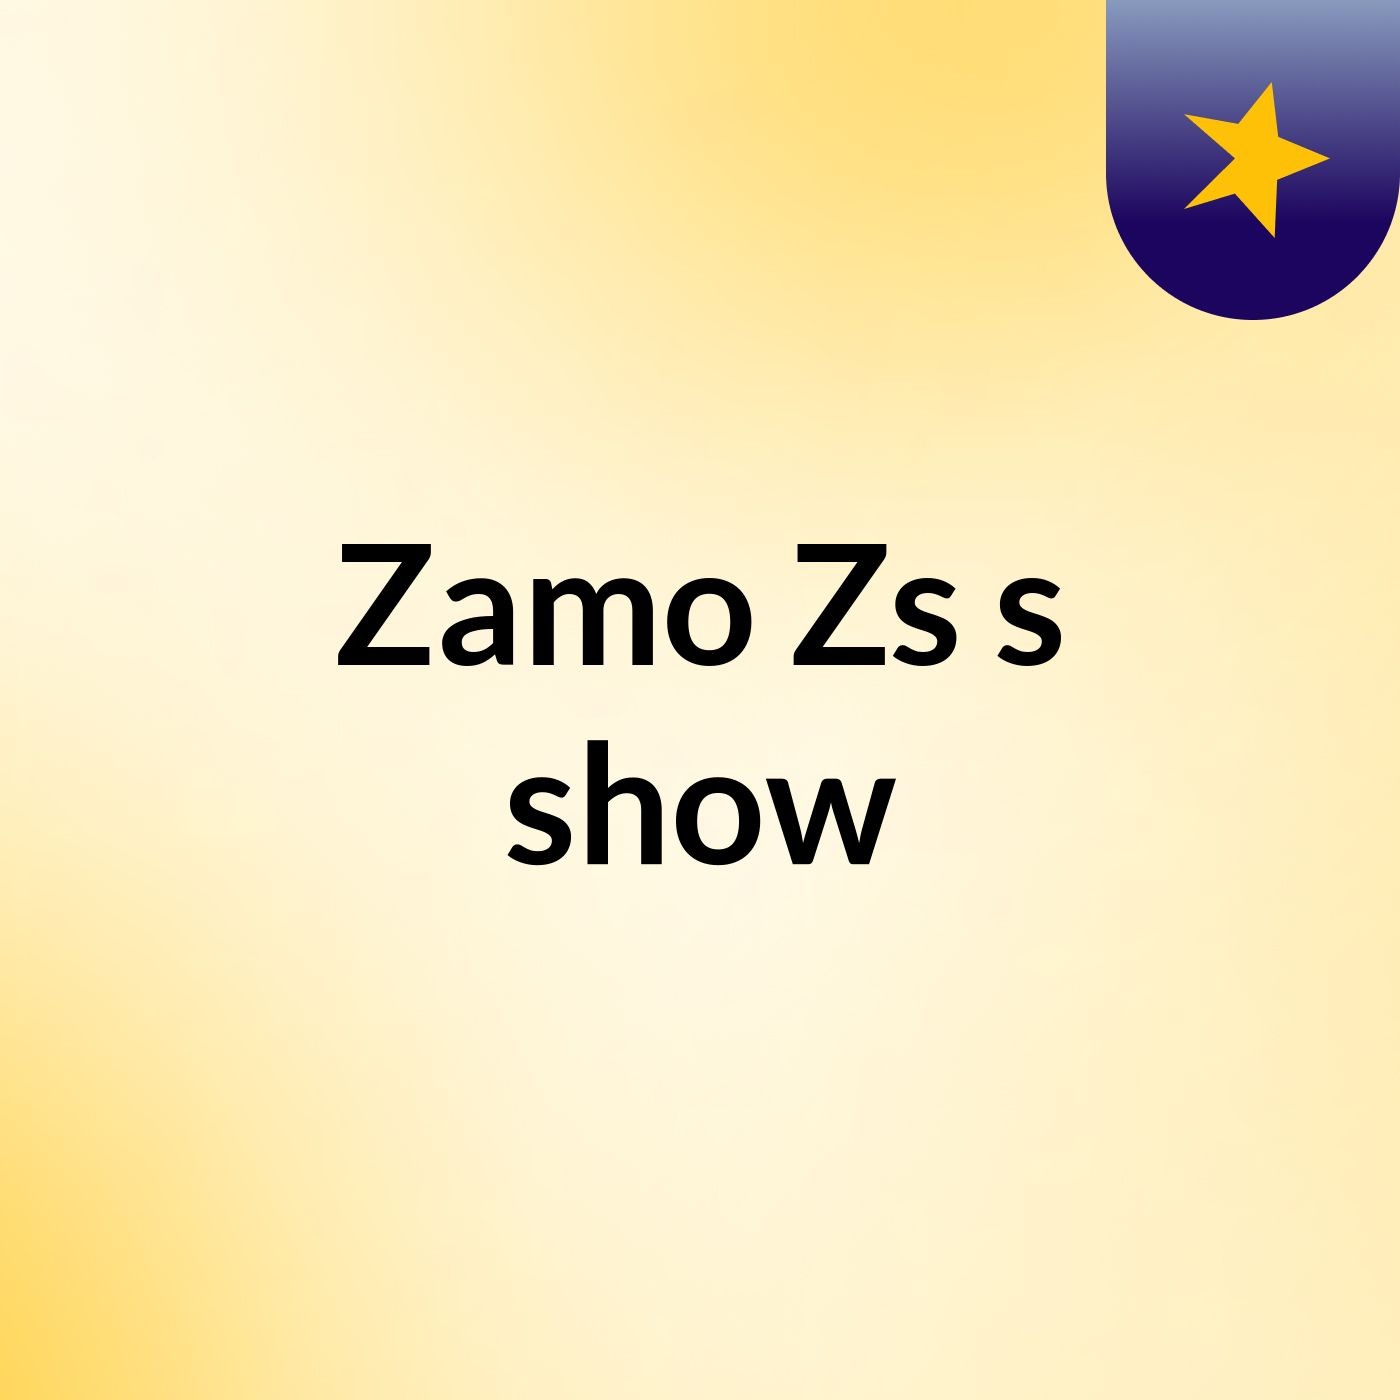 Zamo Zs's show